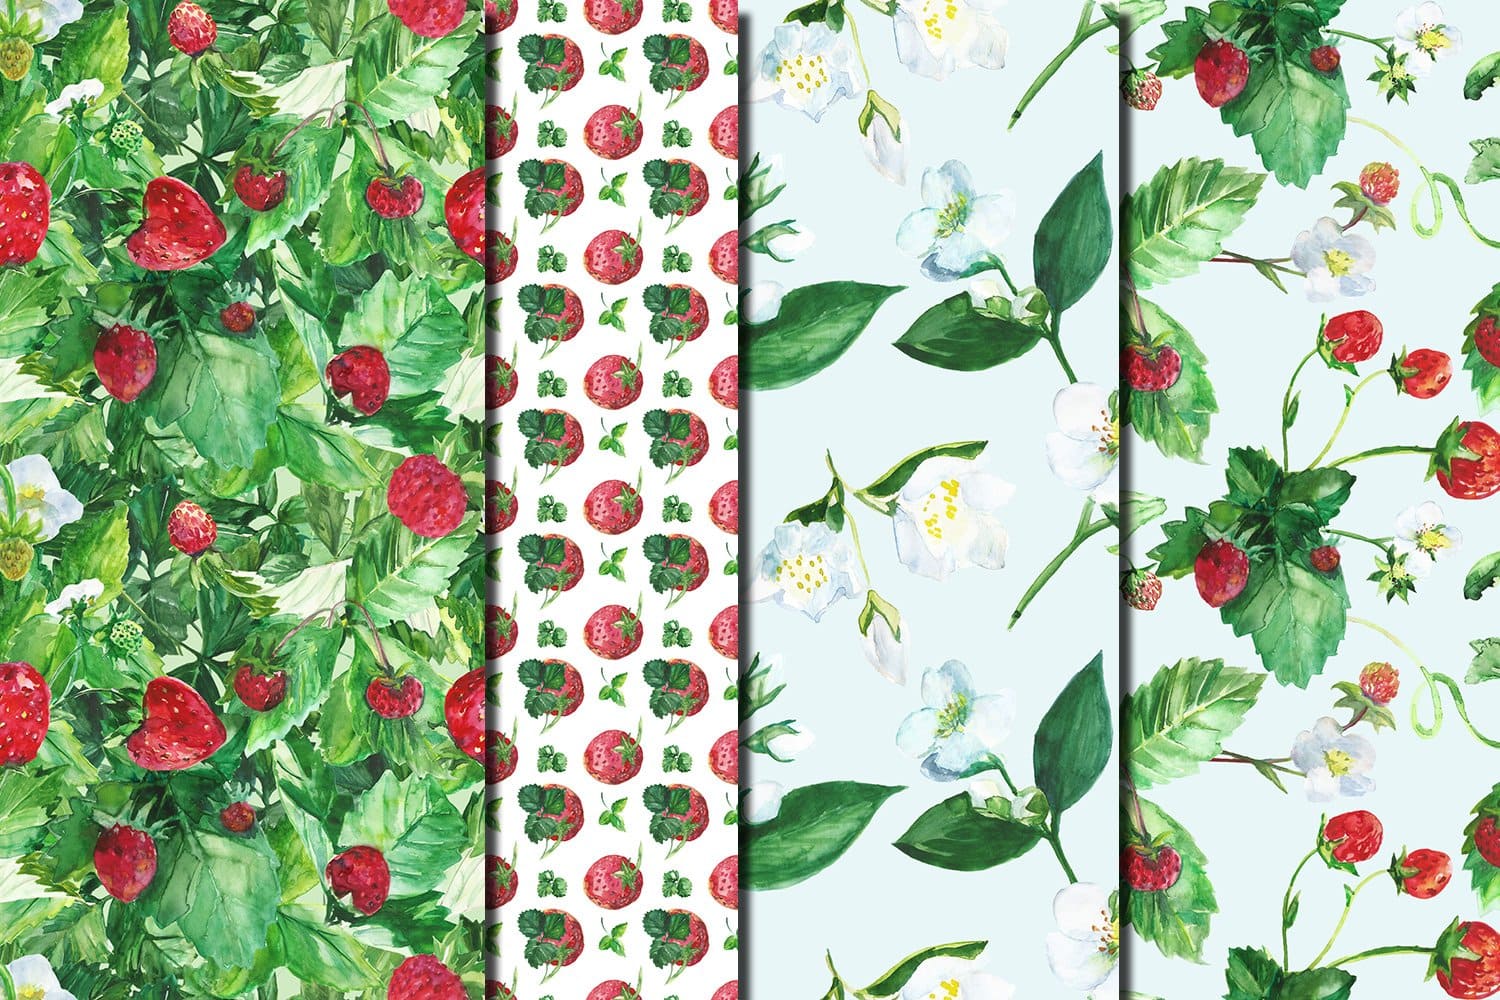 Plant strawberry design on digital paper pack.